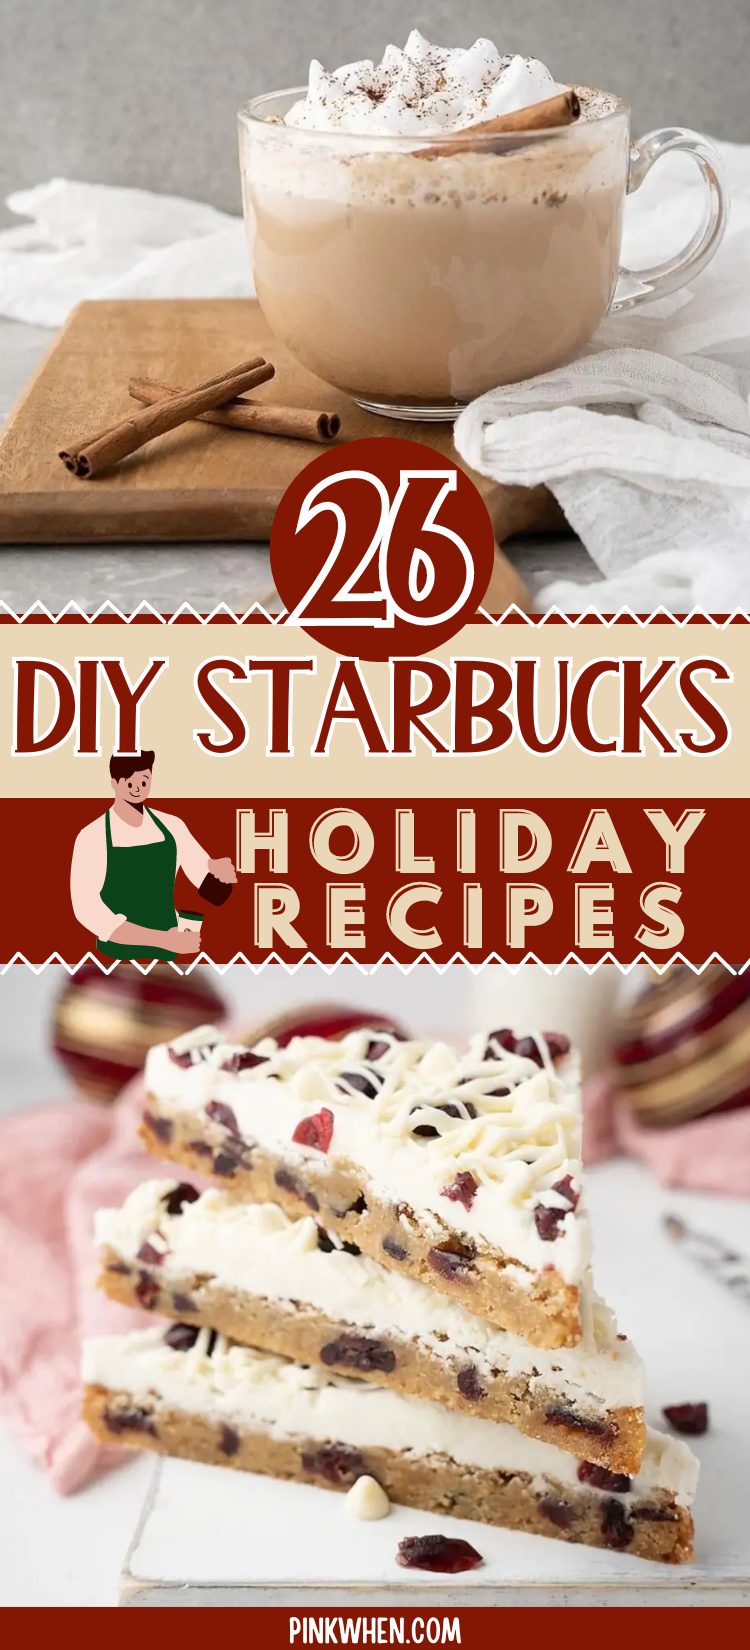 26 DIY Starbucks Seasonal Recipes to Make at Home